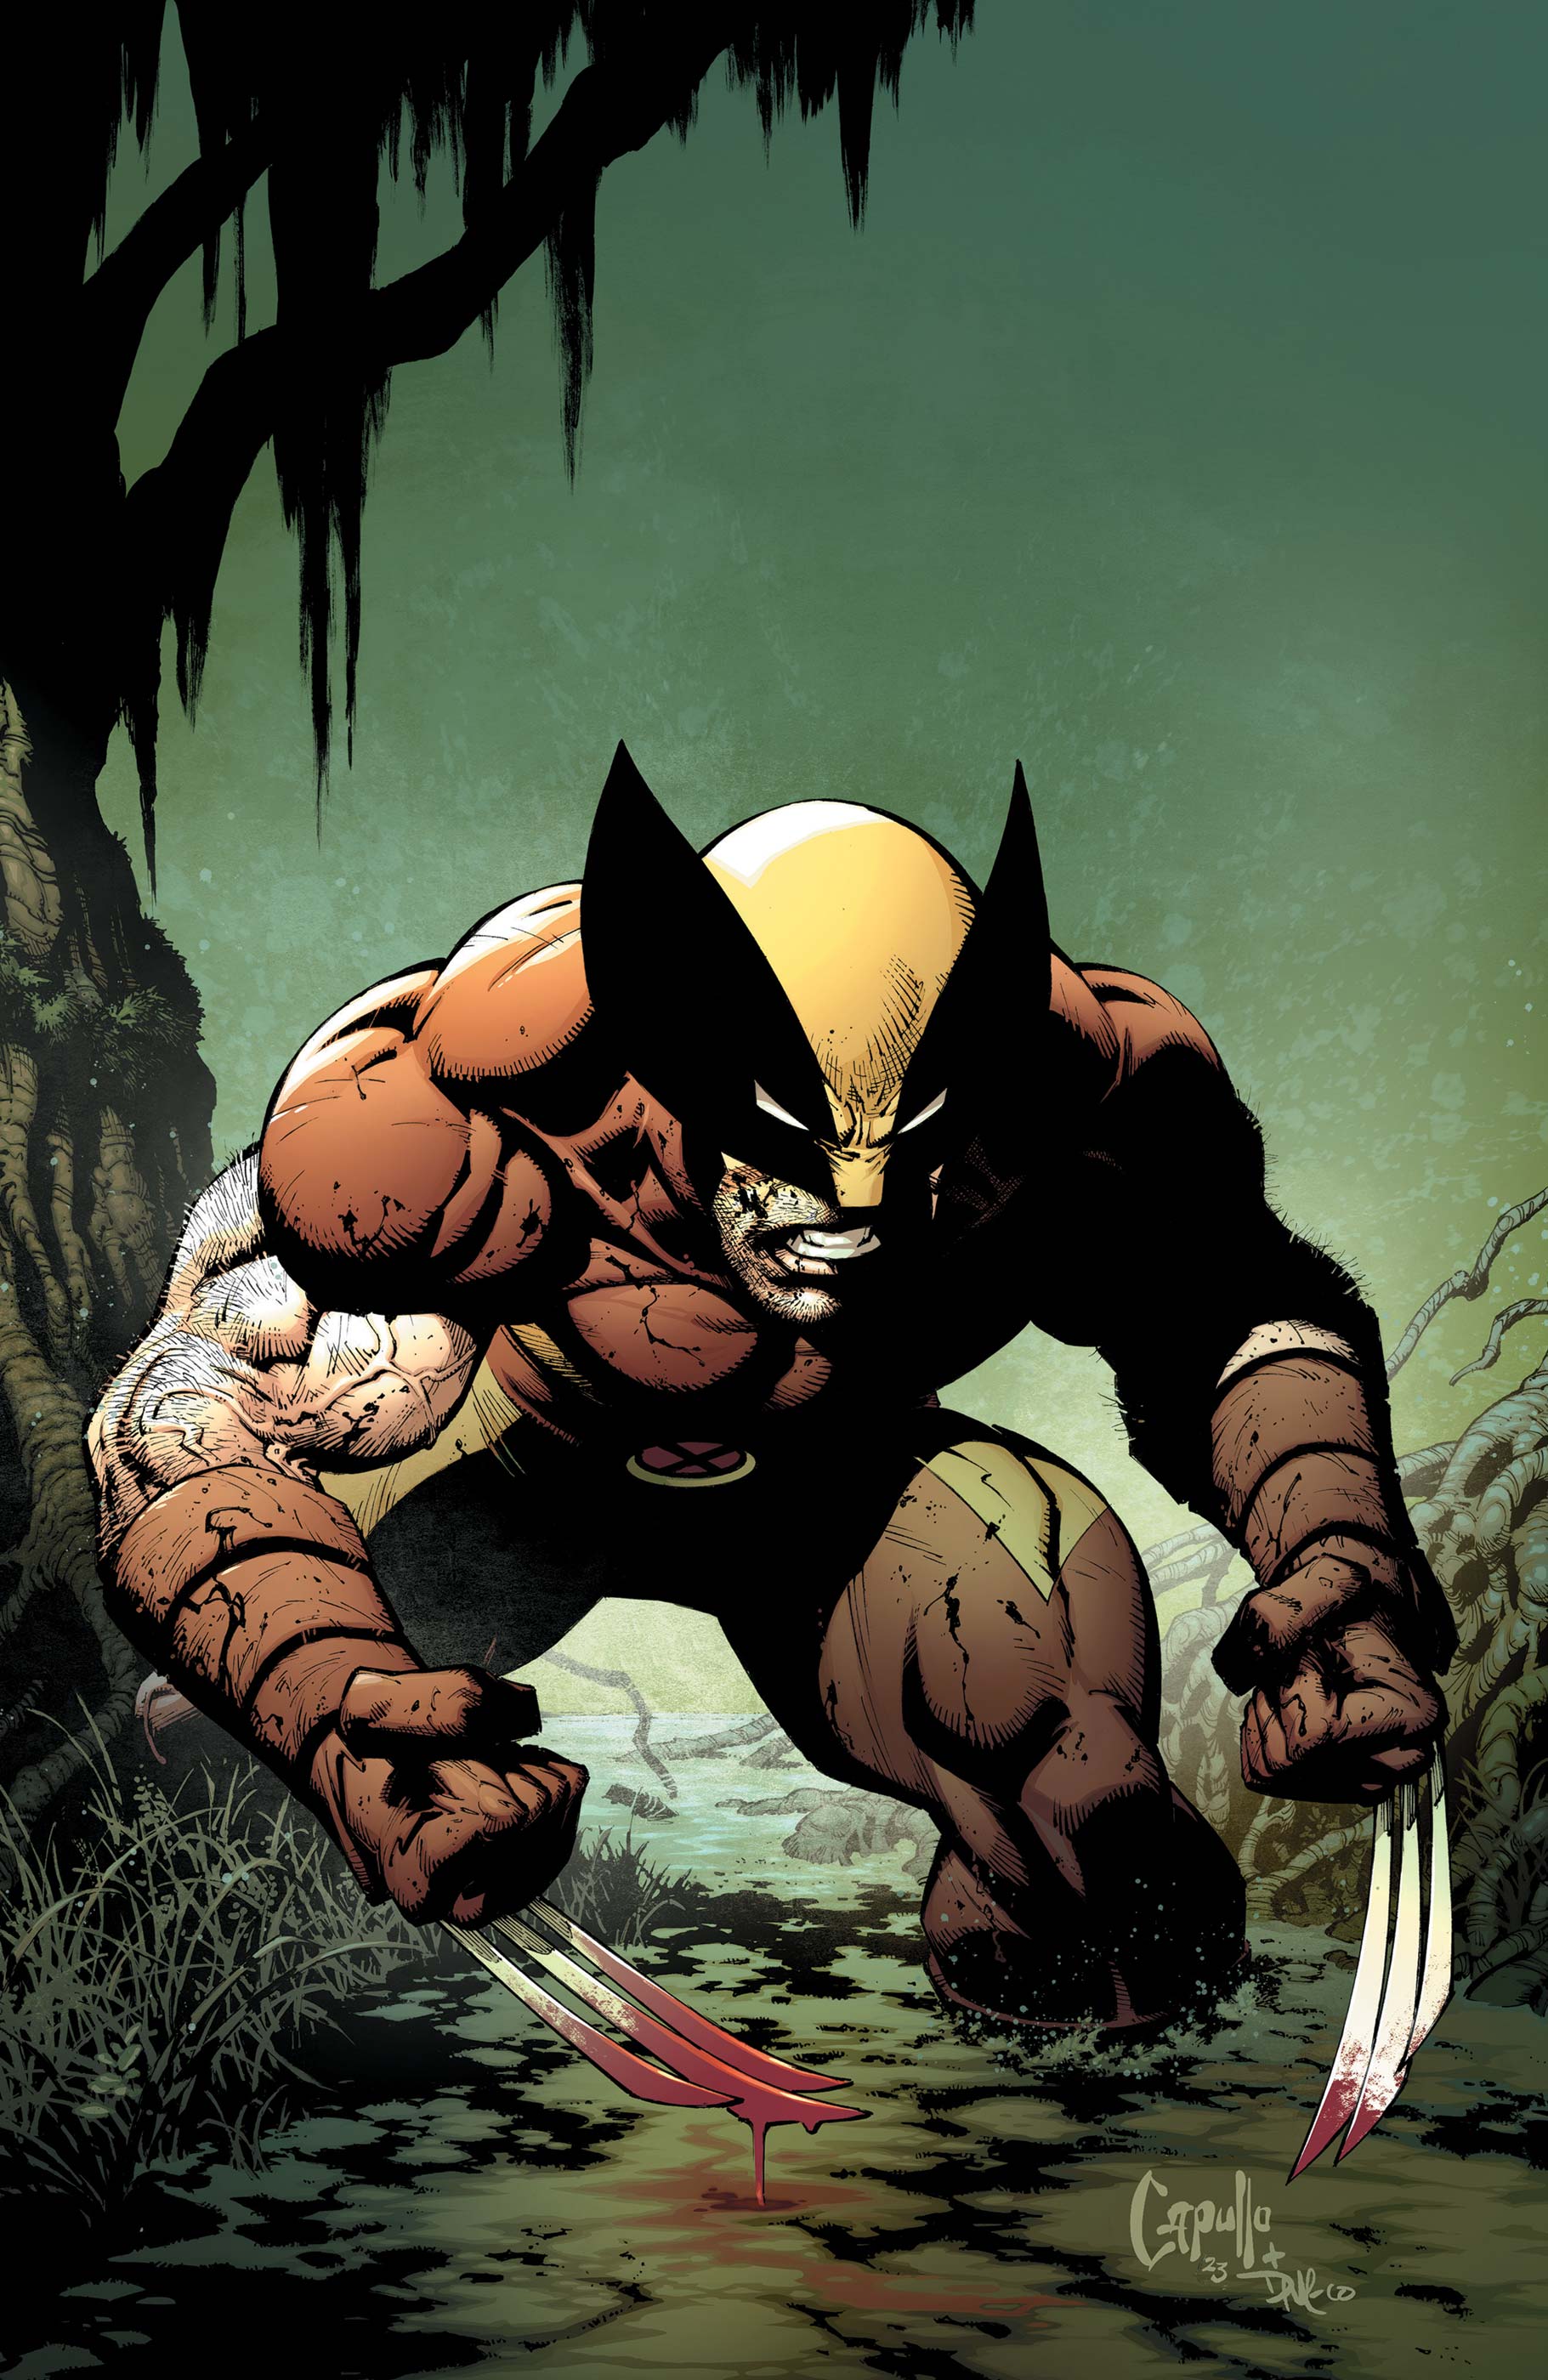 Wolverine (2020) #41 (Variant)